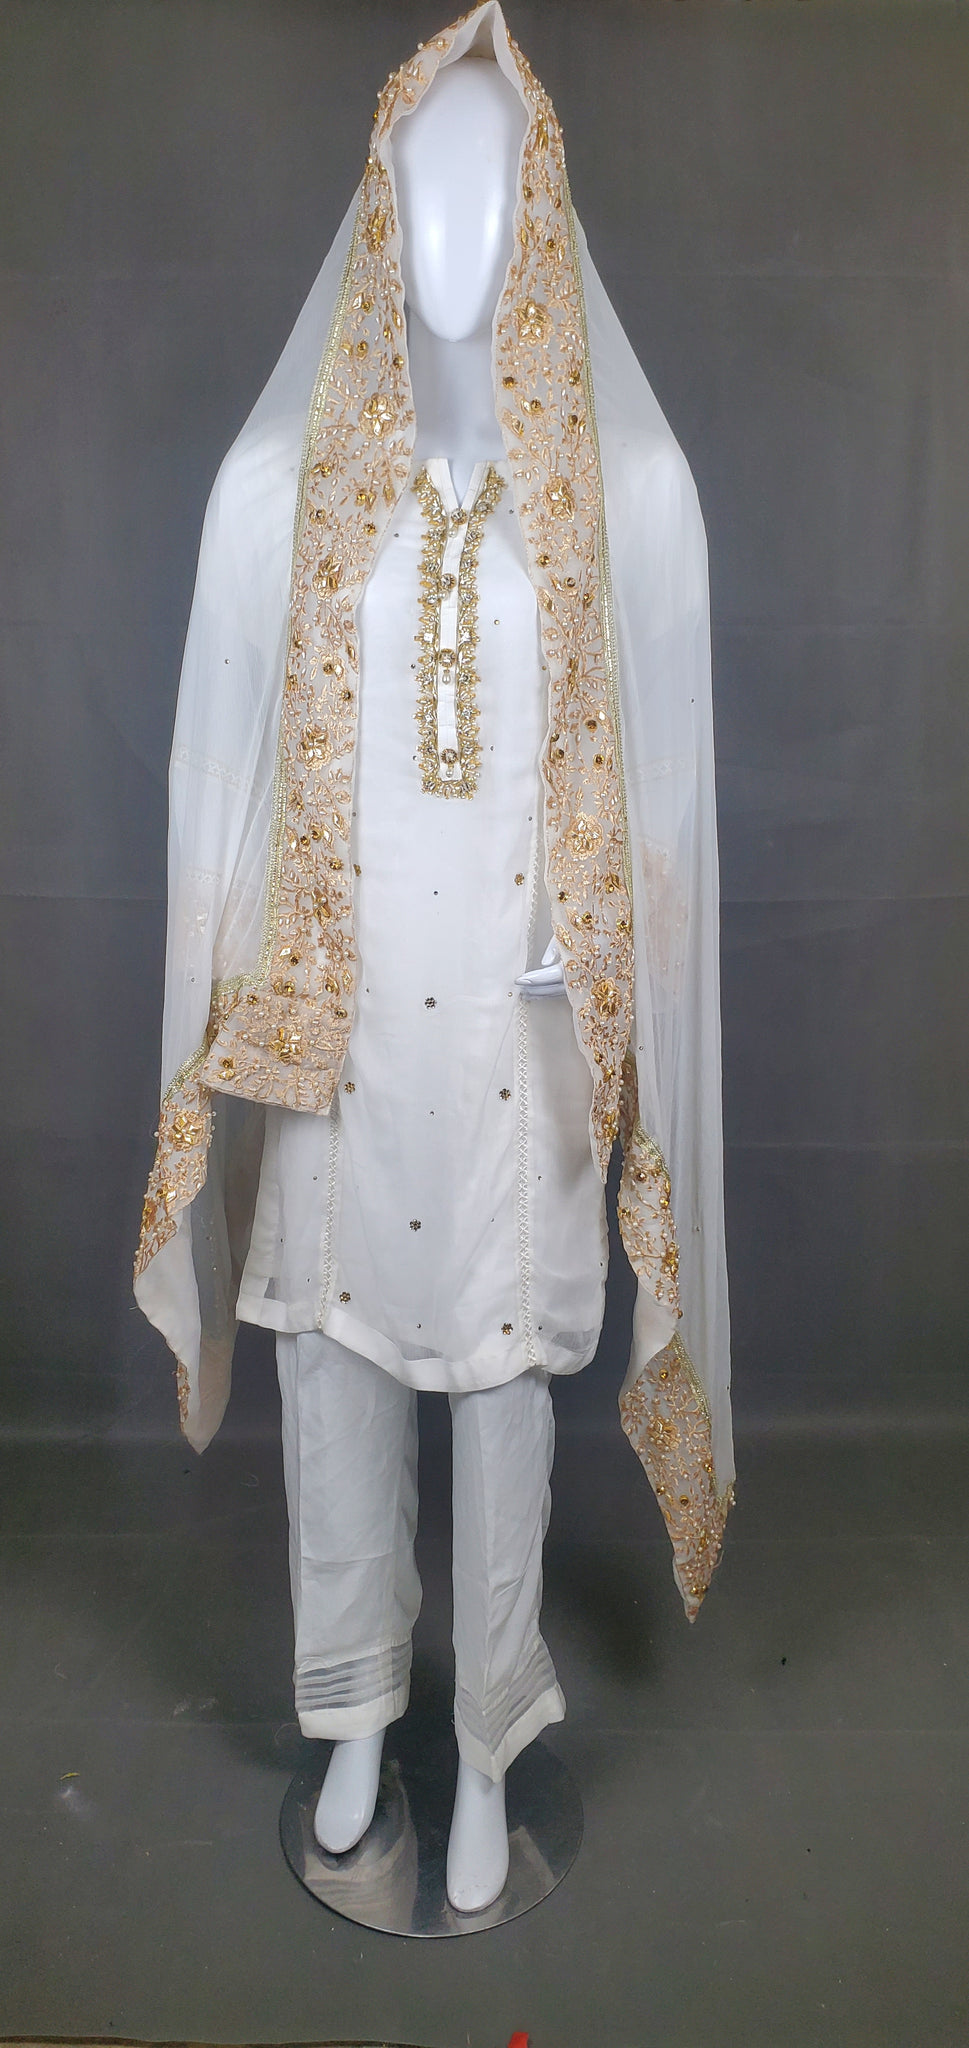 3PC Dress on Chiffon with Gota Embroidery - White/Gold